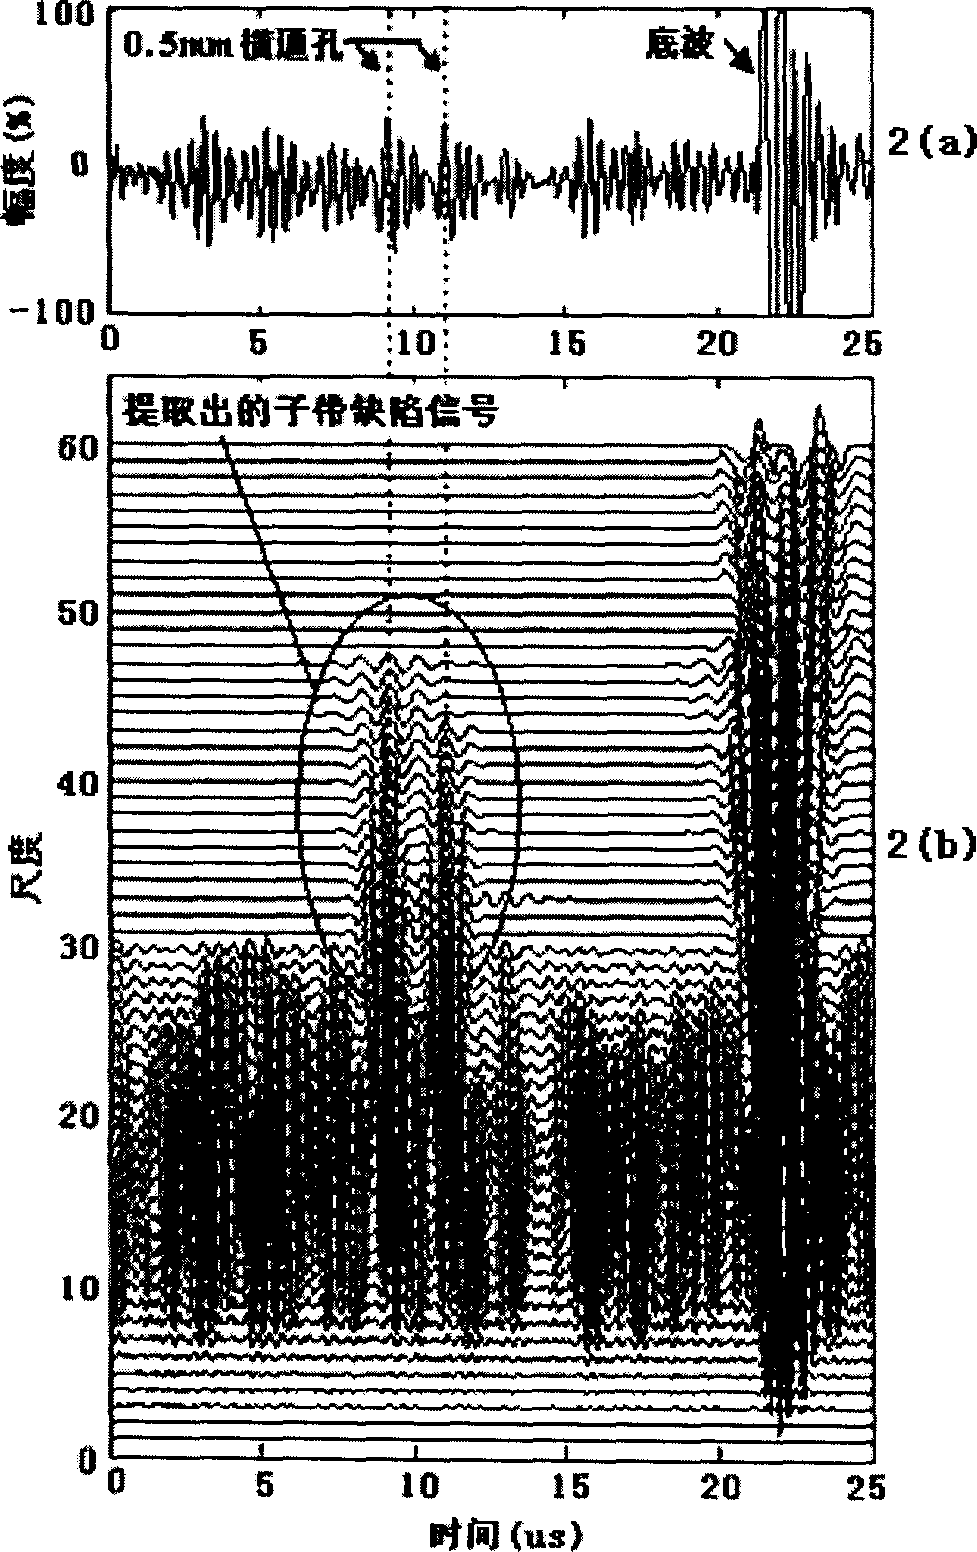 Time-spectrum analysis process method of ultrasonic testing material of coarse crystalline